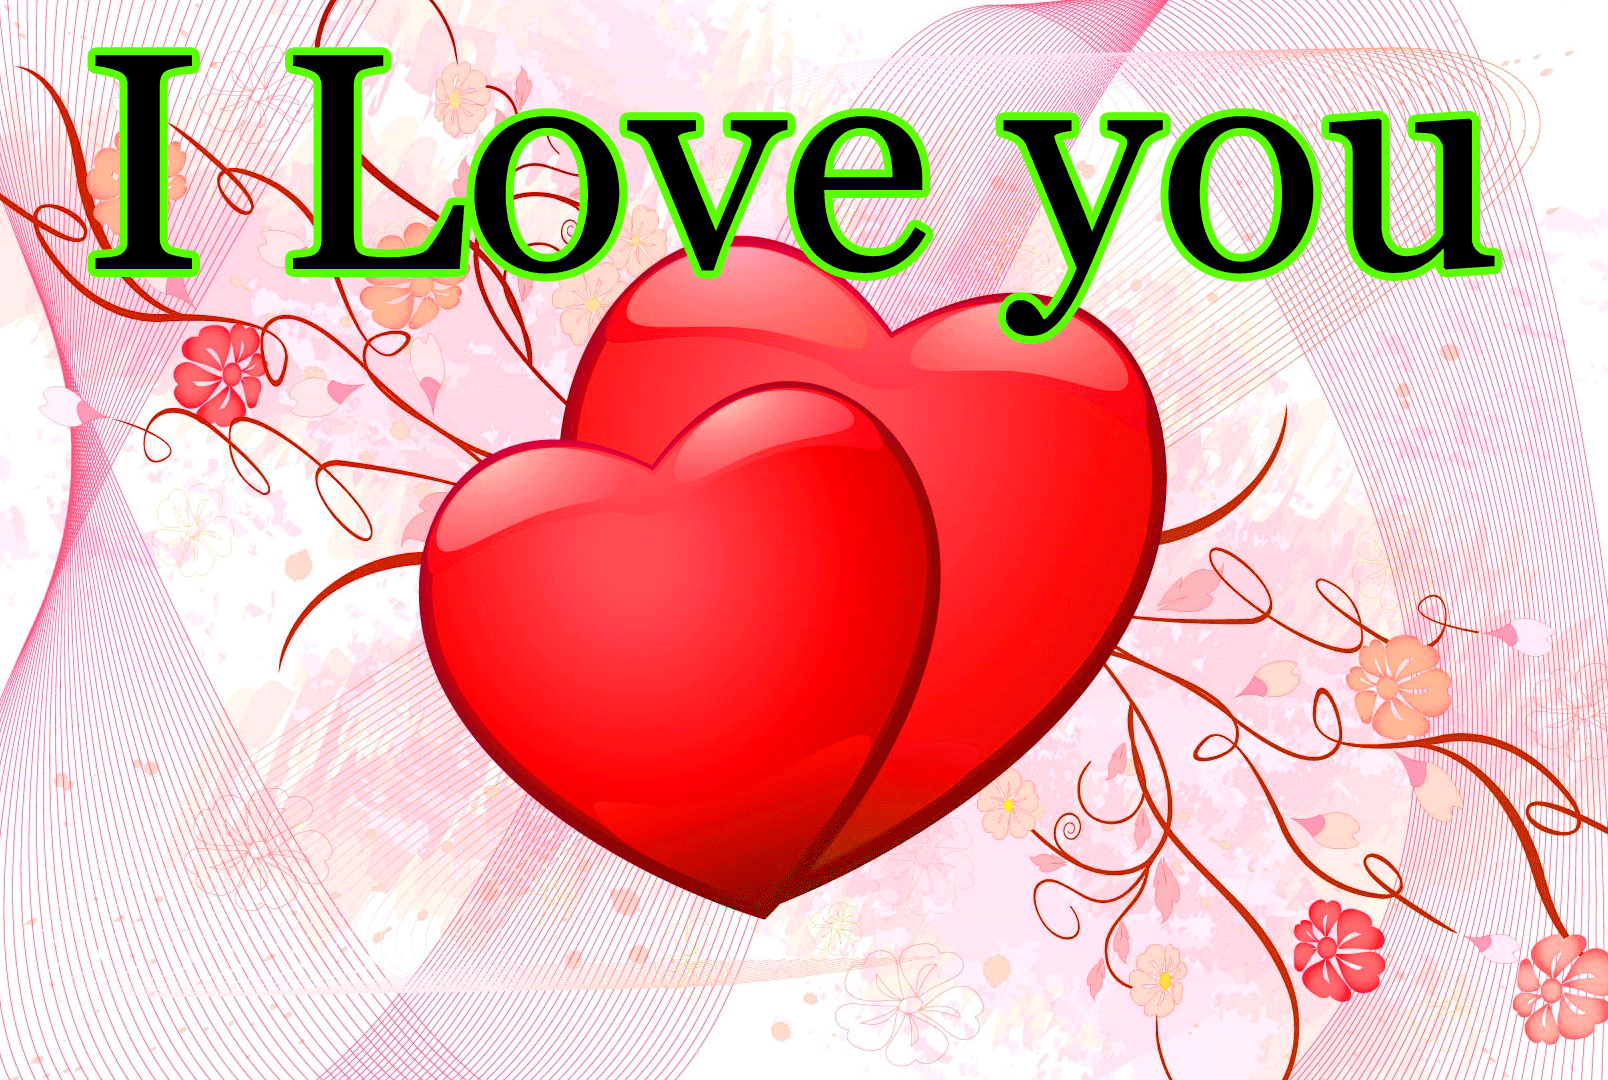 I Love You Image Wallpaper Pics HD Download, Download